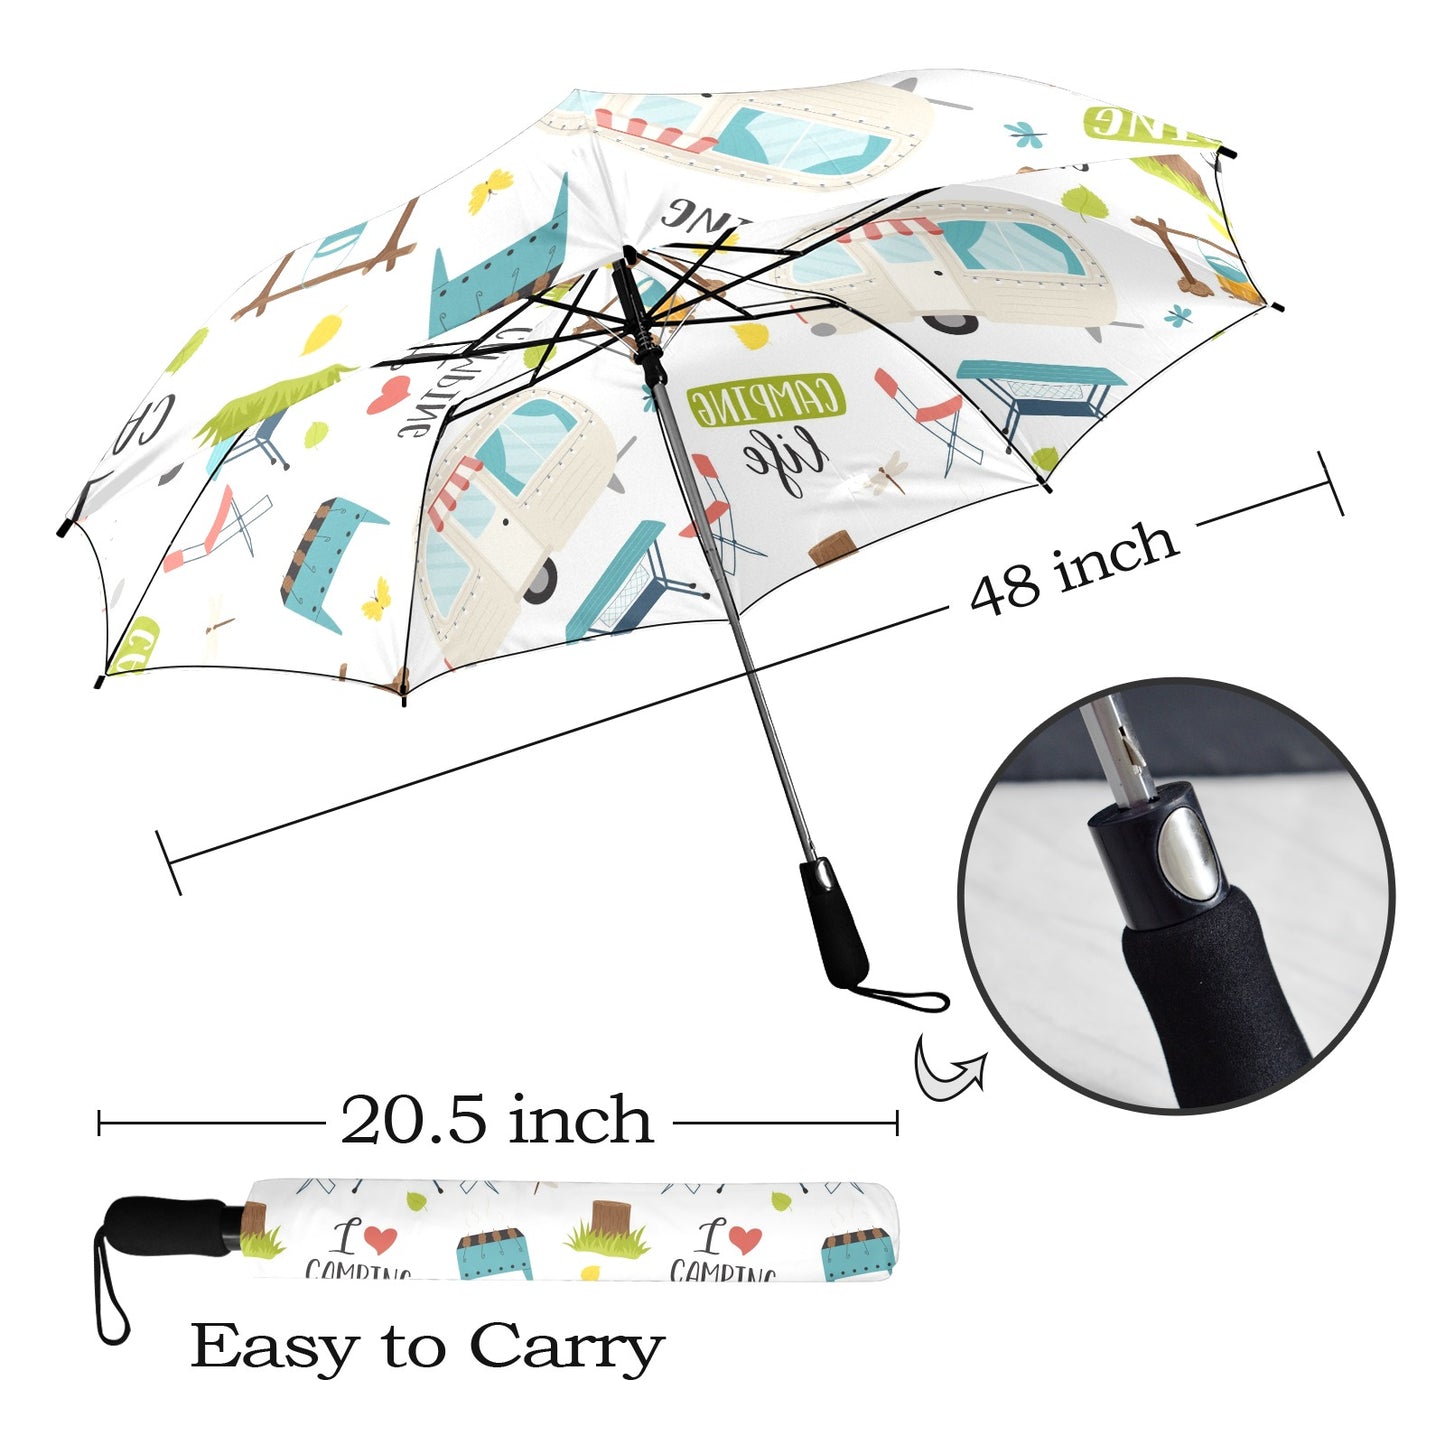 Camping Life Semi-Automatic Foldable Umbrella Semi-Automatic Foldable Umbrella